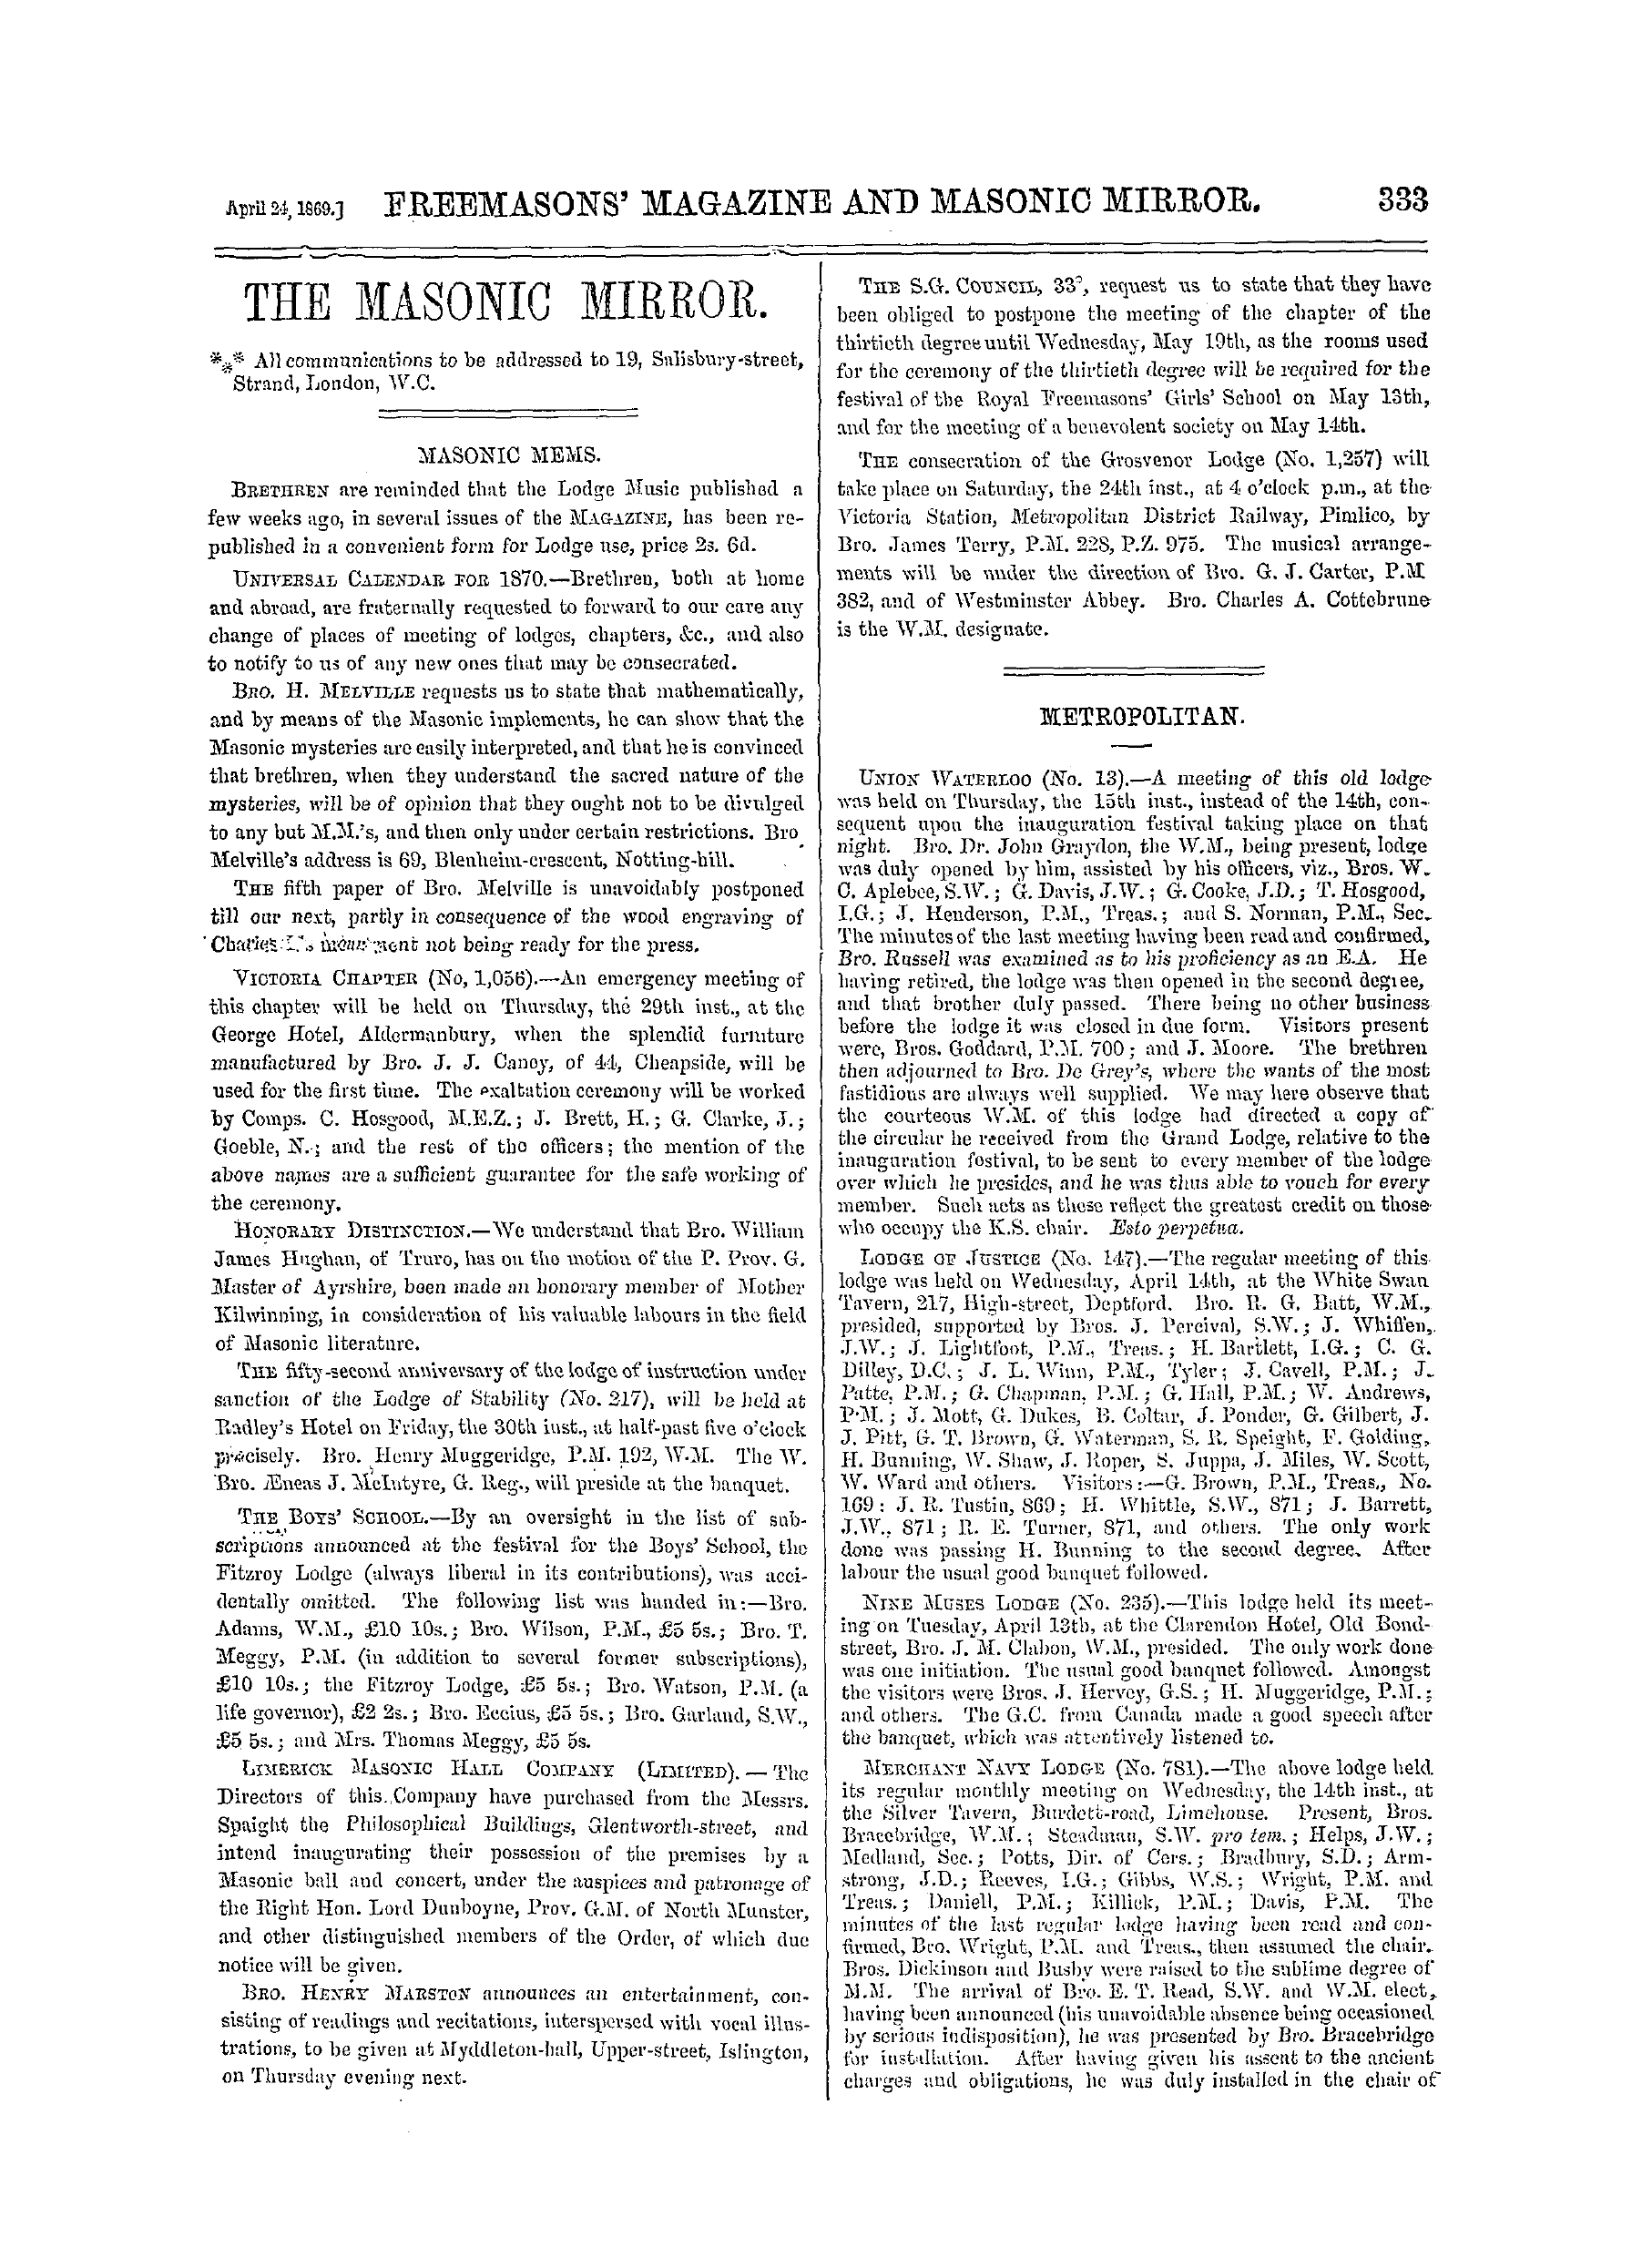 The Freemasons' Monthly Magazine: 1869-04-24 - Metropolitan.